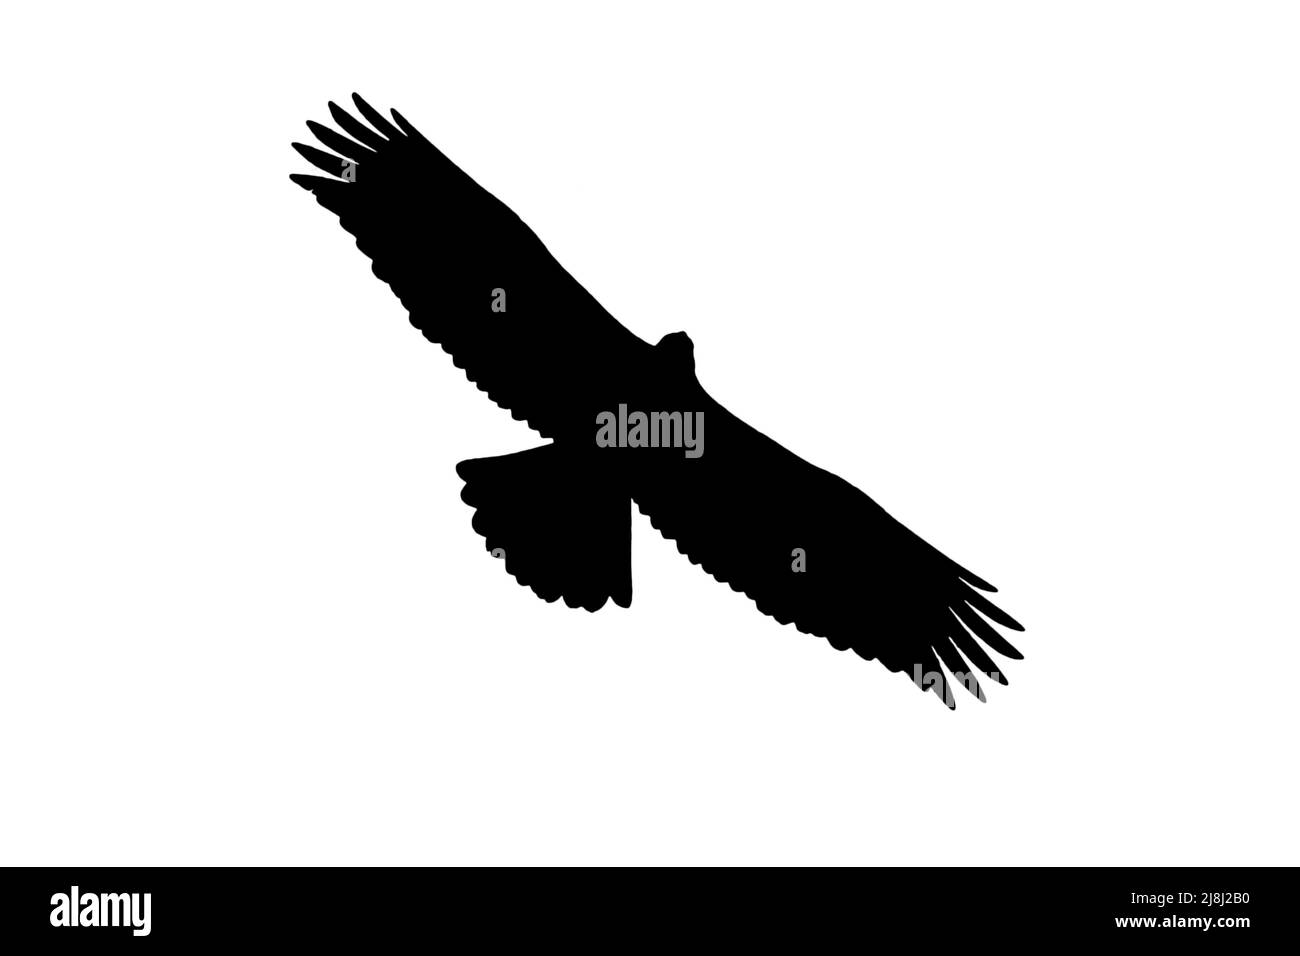 Silueta de águila dorada europea (Aquila chrysaetos) juvenil en vuelo contorneado sobre fondo blanco para mostrar alas, cabeza y cola formas Foto de stock